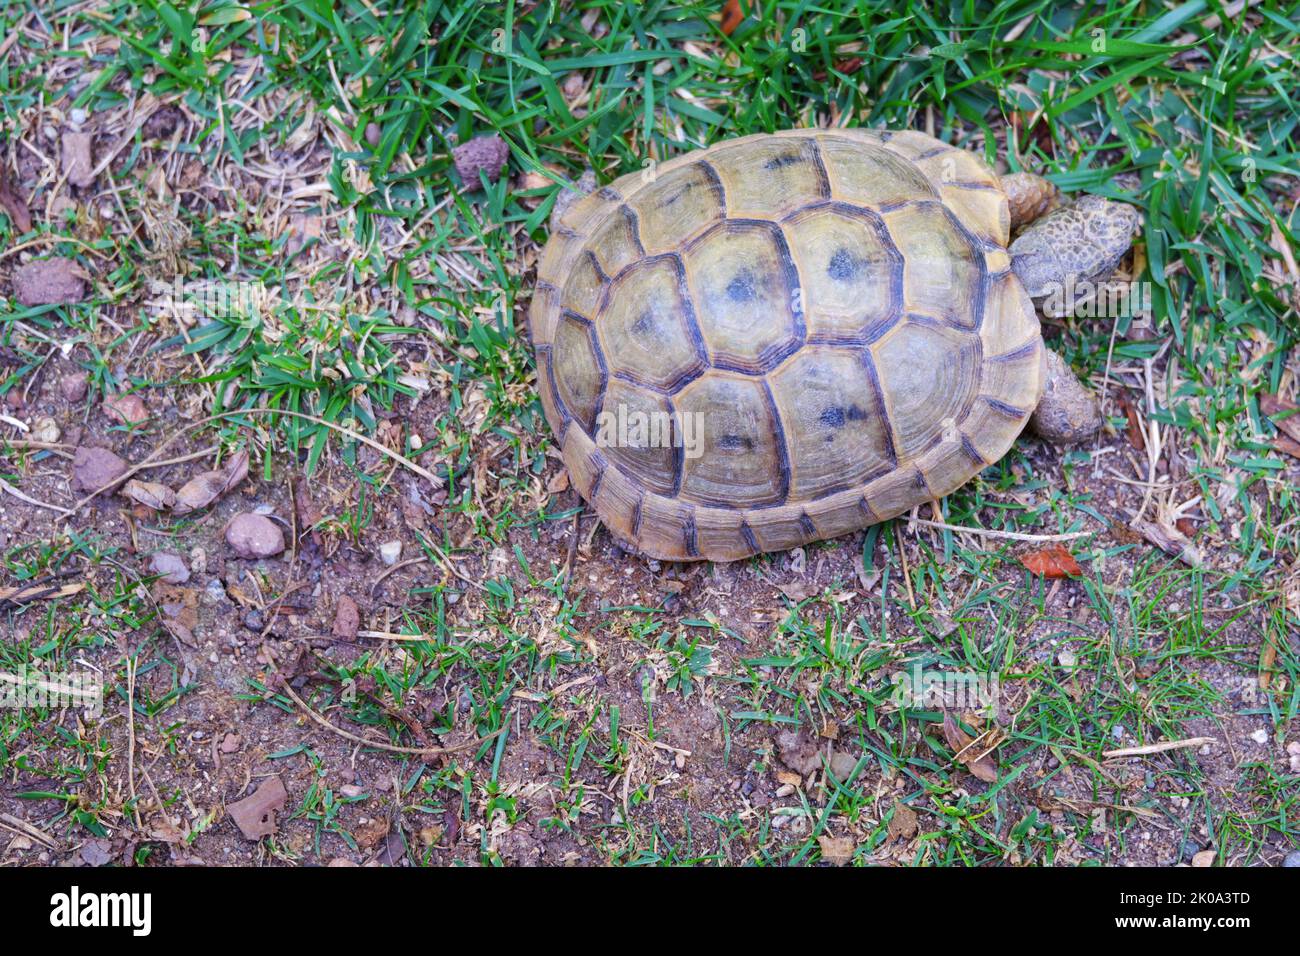 European land turtle moving land near grass Stock Photo